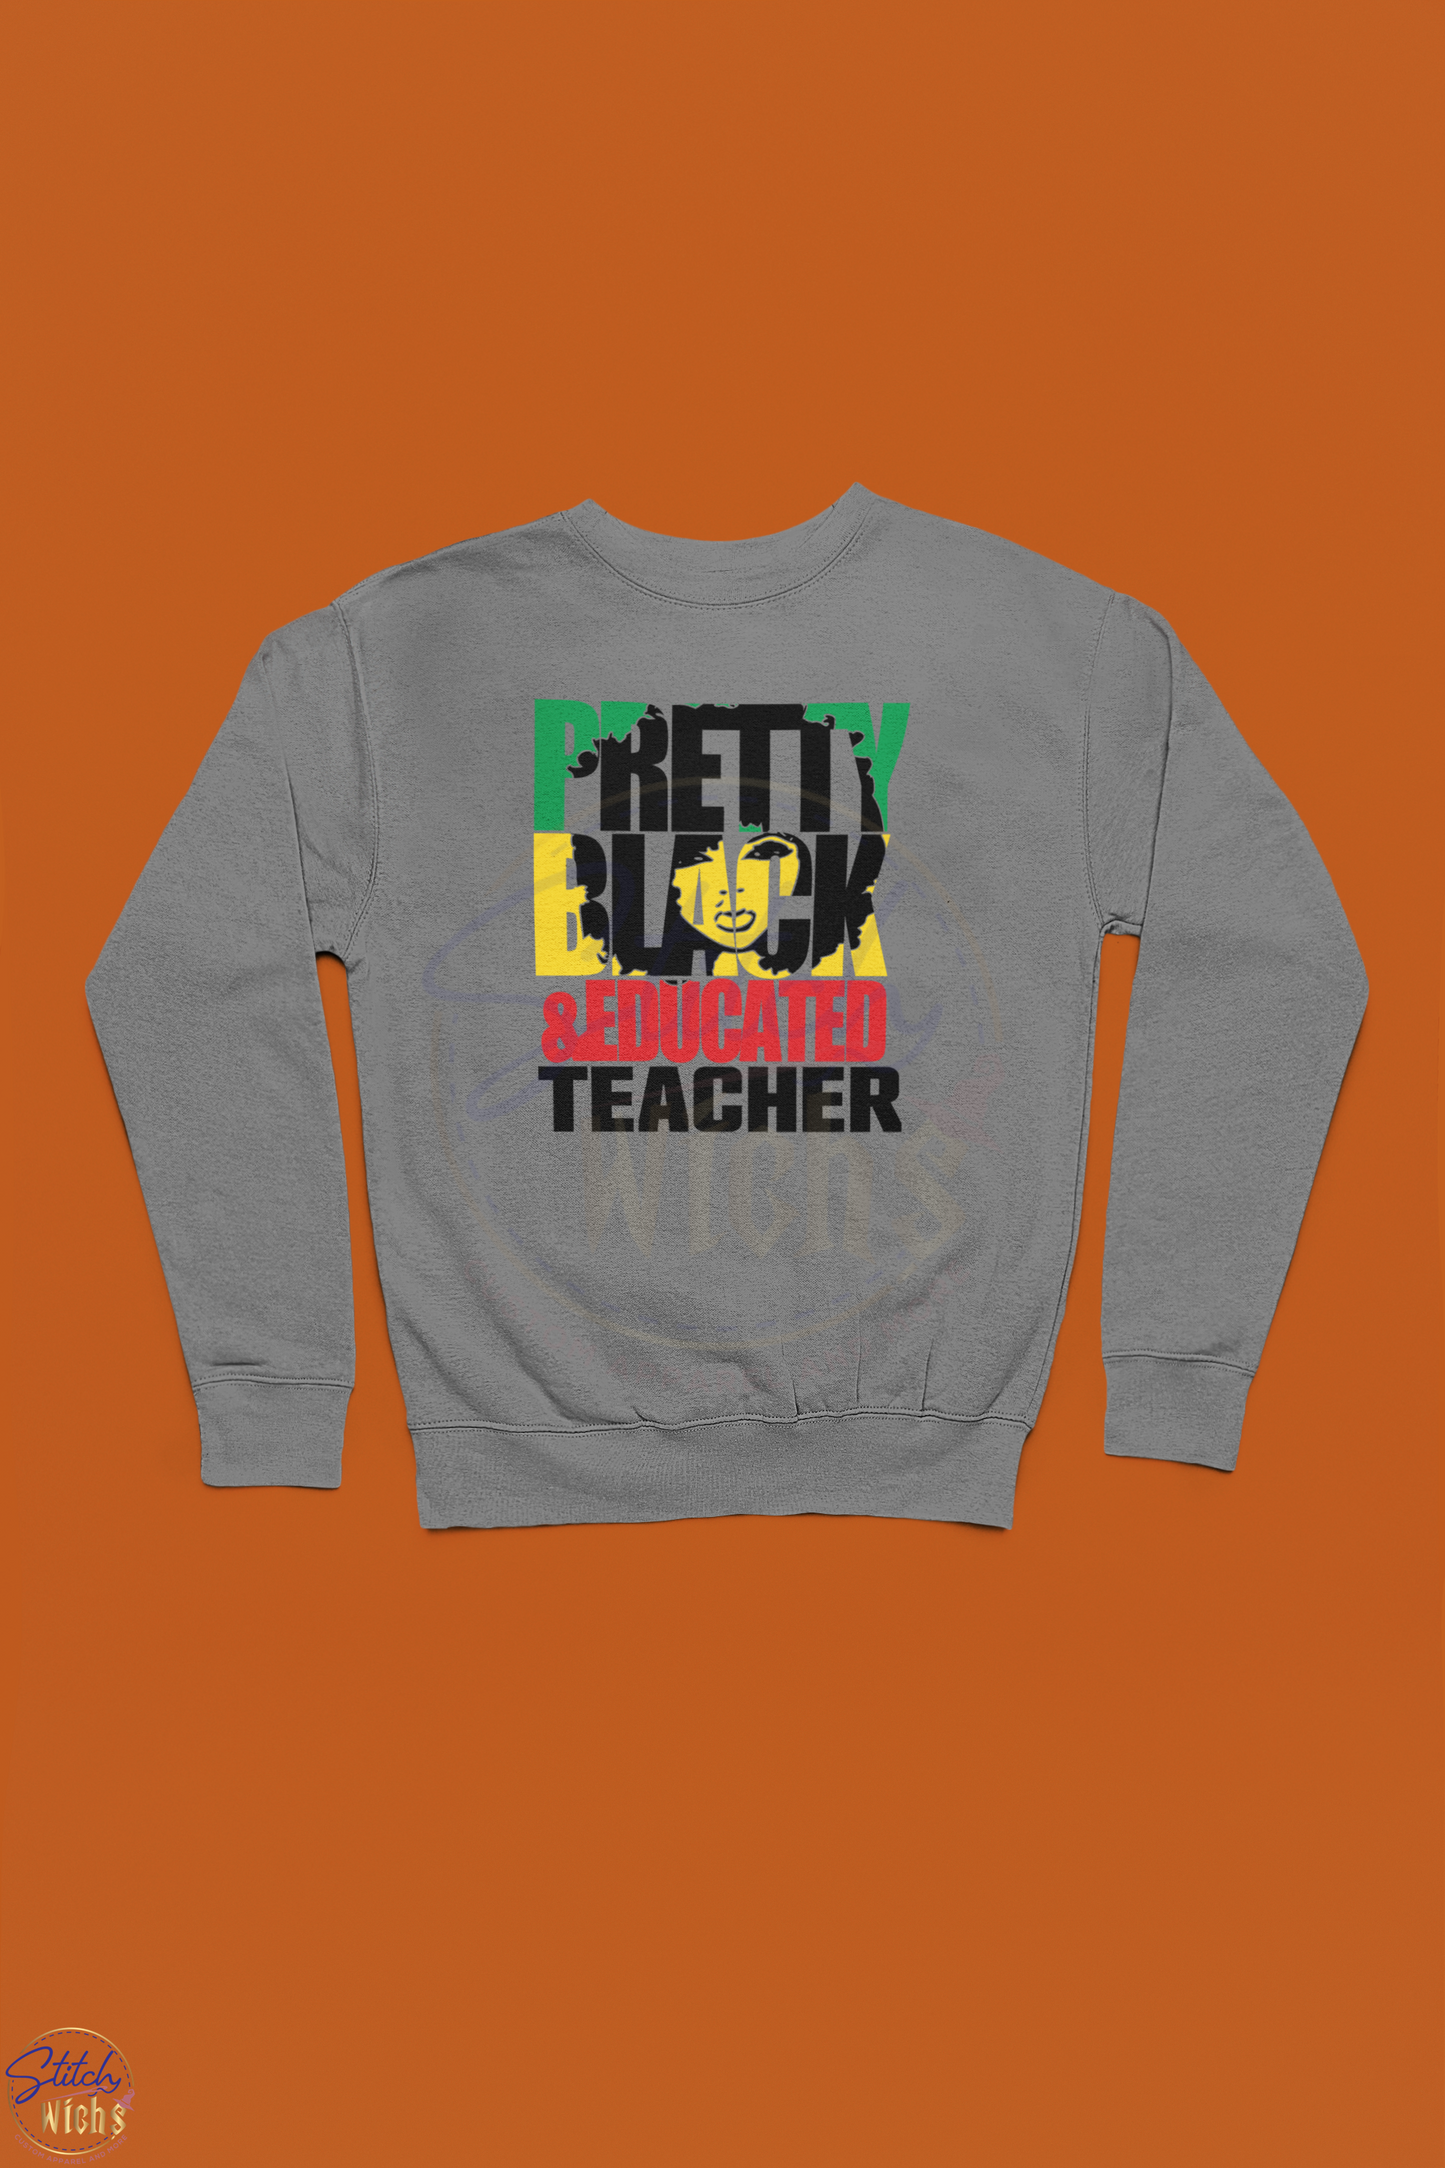 Pretty Black Educated Teacher Shirt